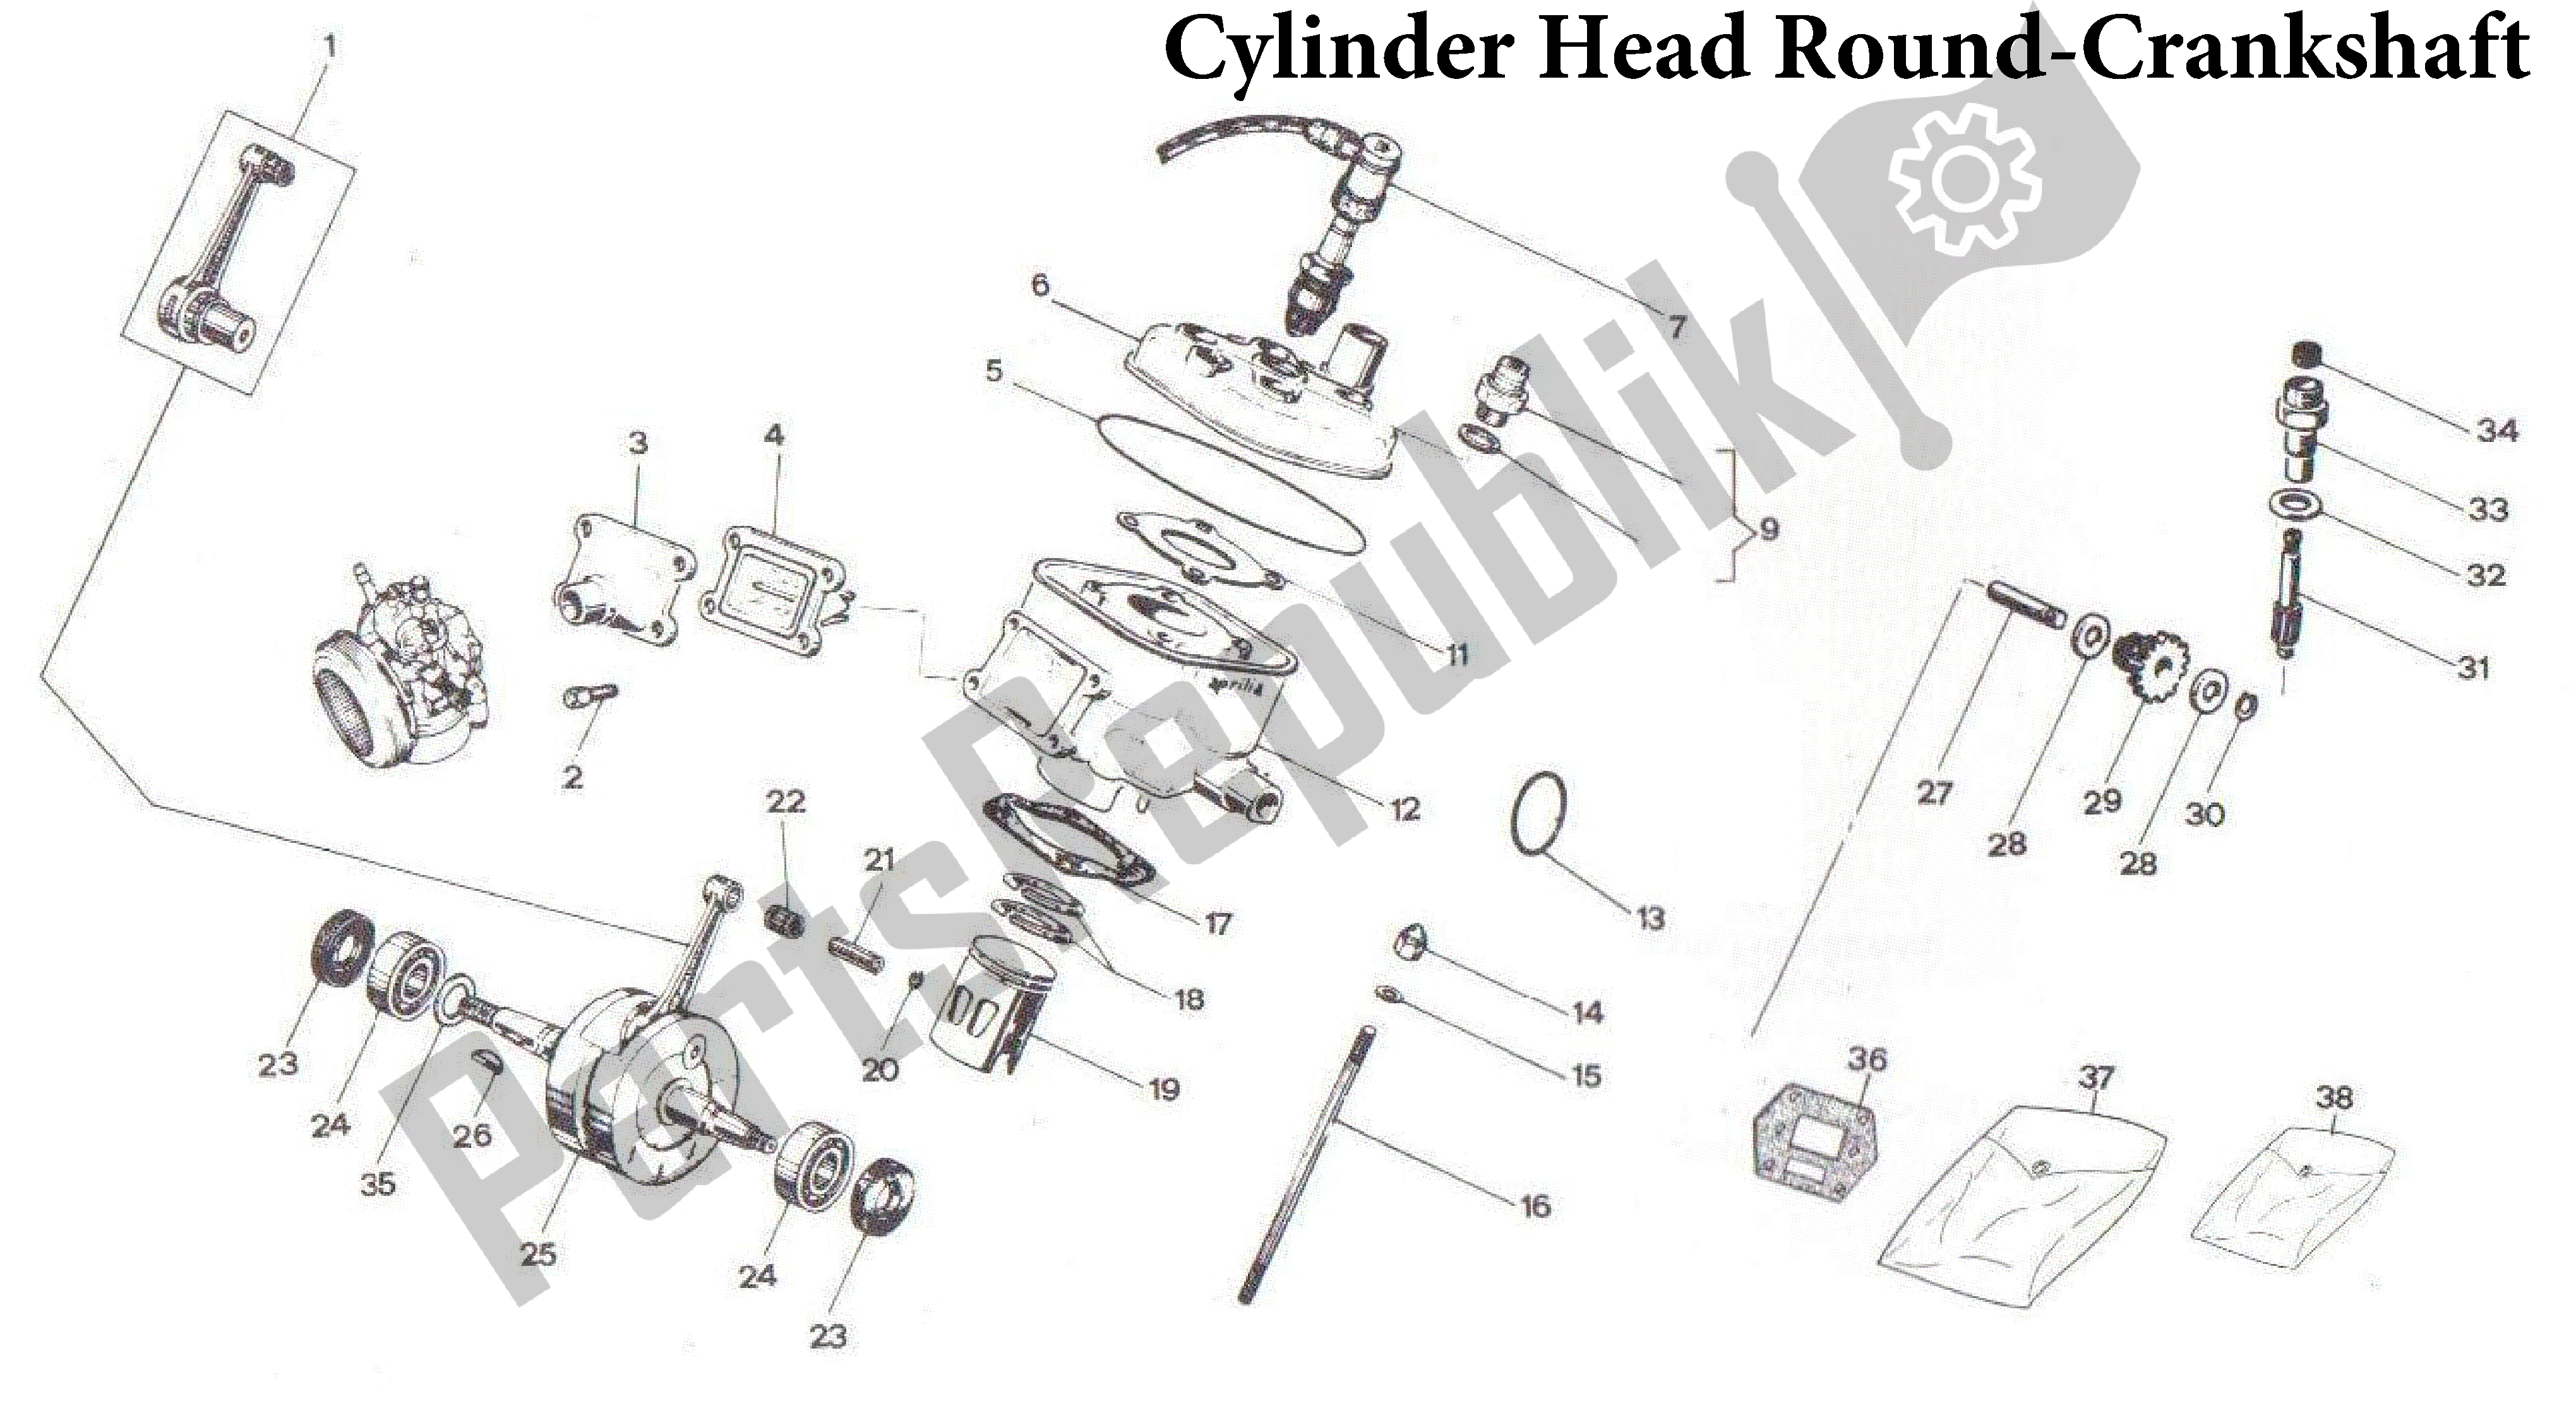 All parts for the Cylinder Head Round-crankshaft of the Aprilia AF1 50 1988